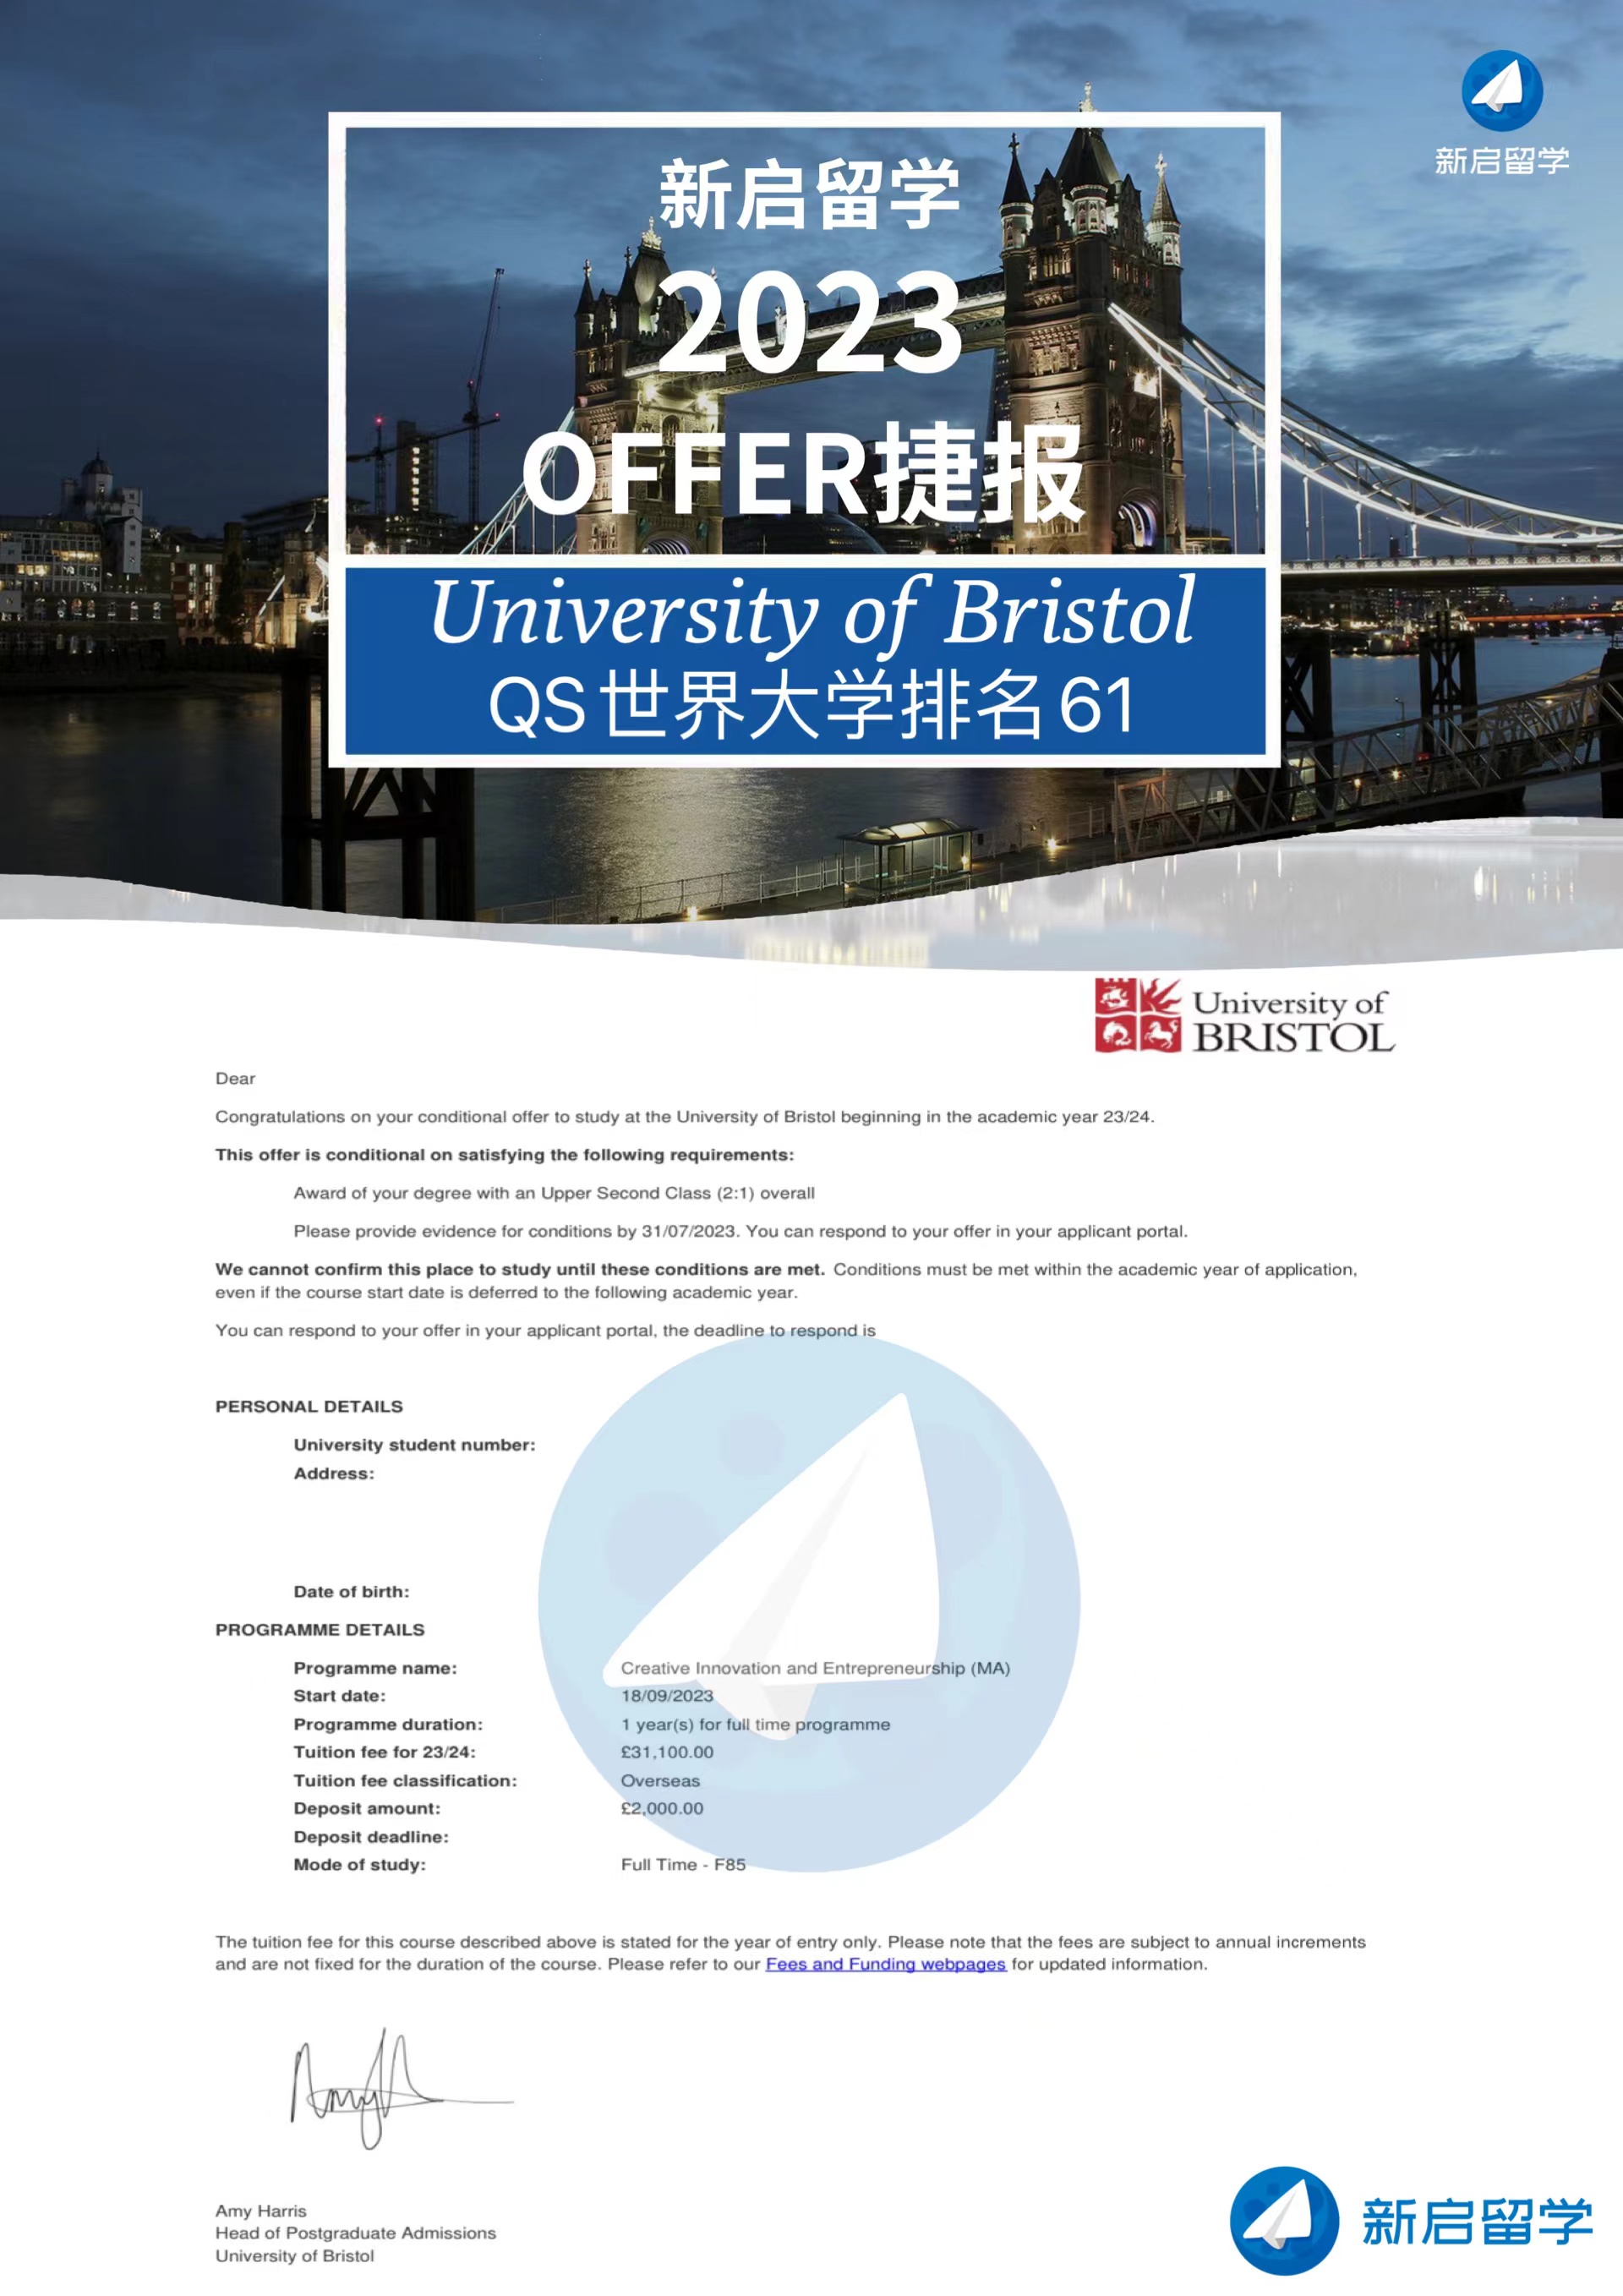 MA Creative Innovation and Entrepreneurship (Bristol)